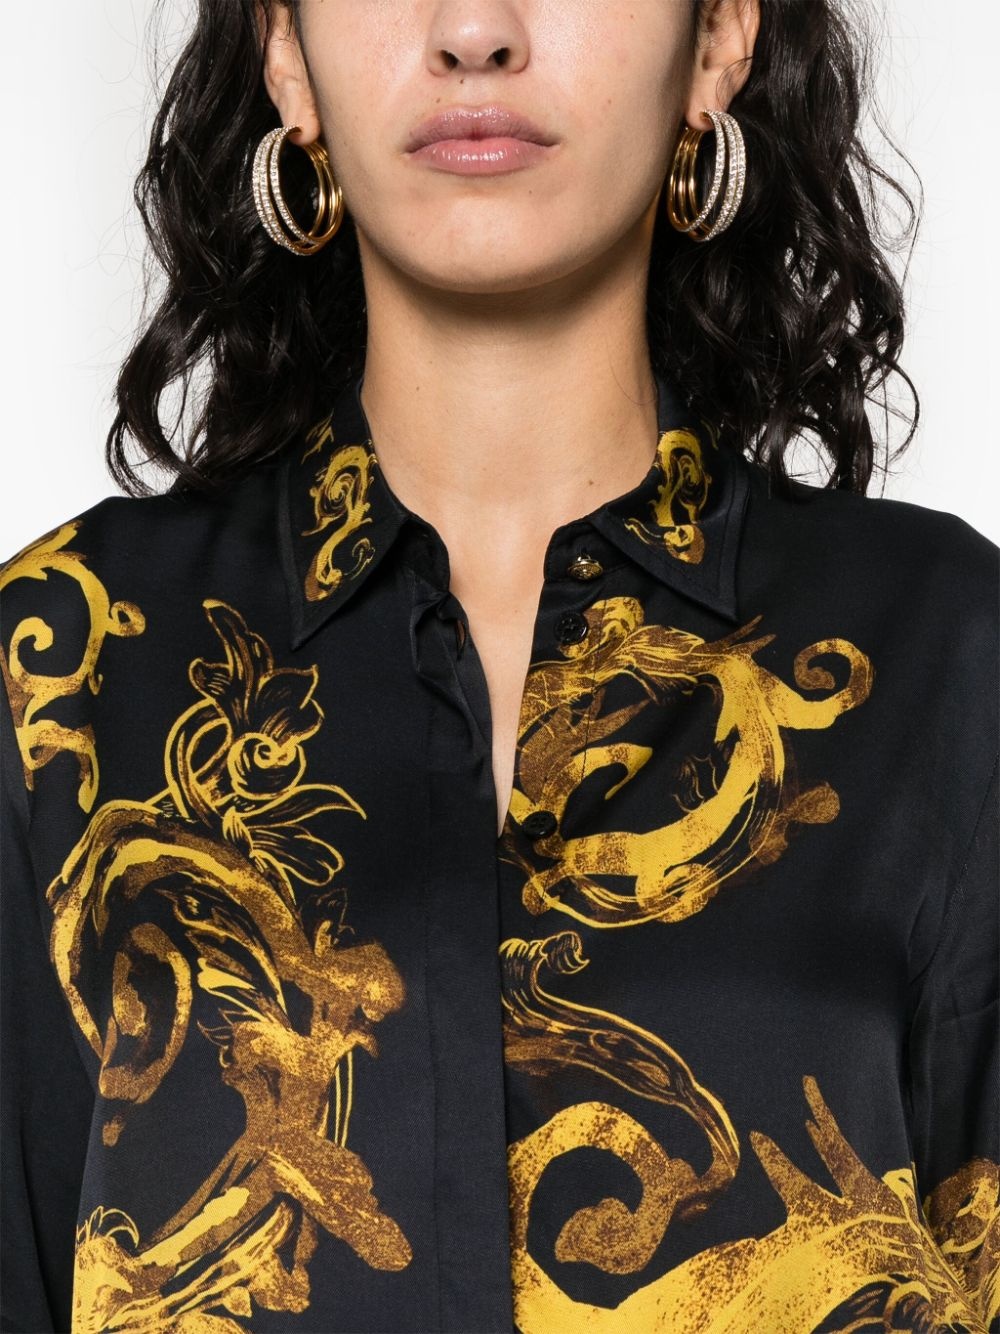 VERSACE JEANS COUTURE Watercolour Couture-print shirt | REVERSIBLE